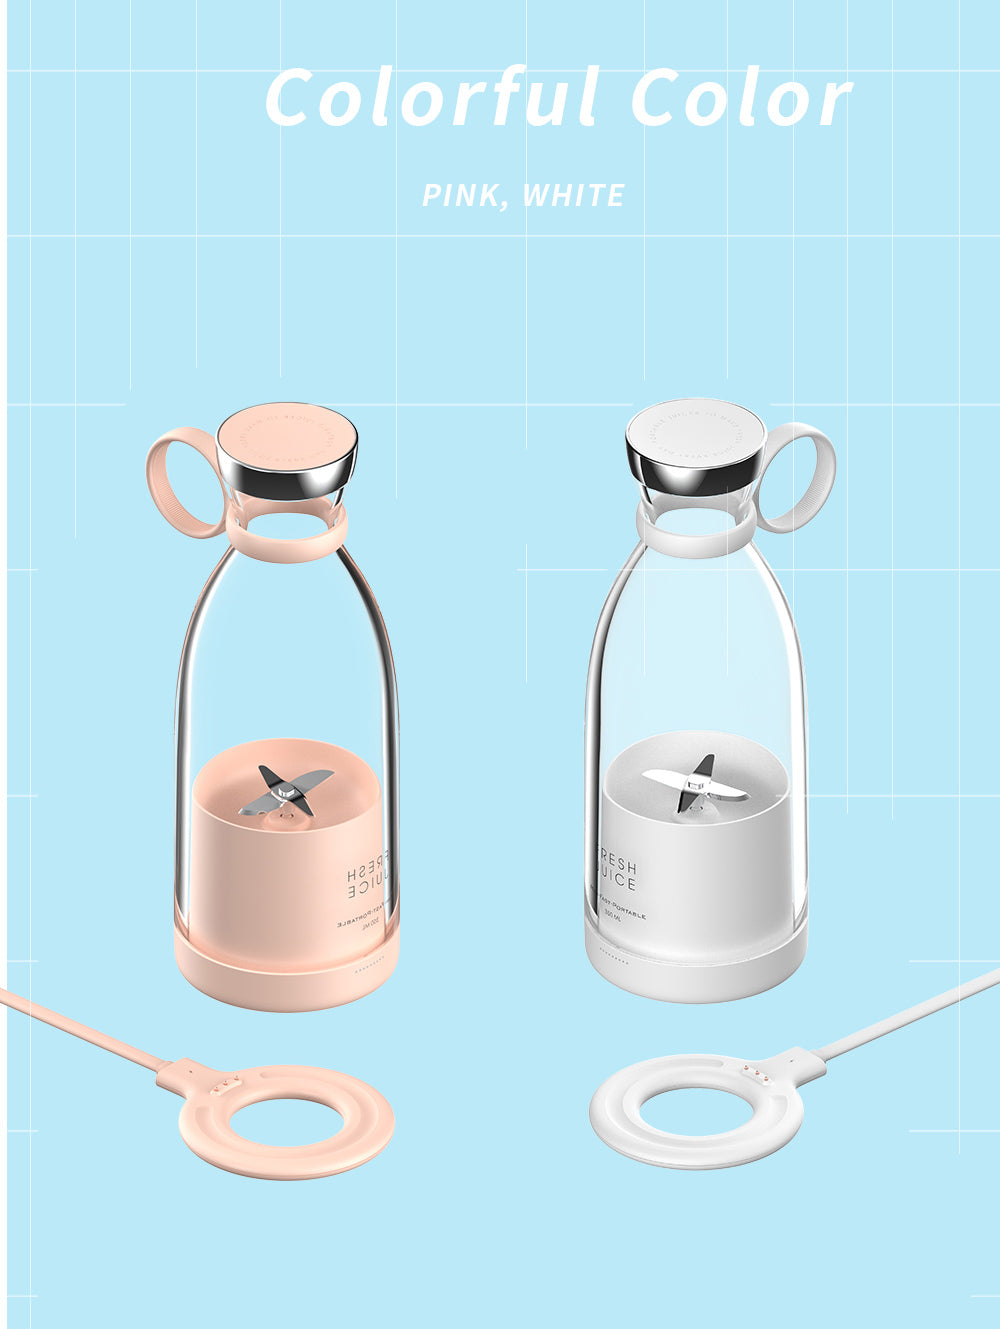 Portable Electric Mini Blender -Multifunction Fruit Juice or Smoothies Mixer